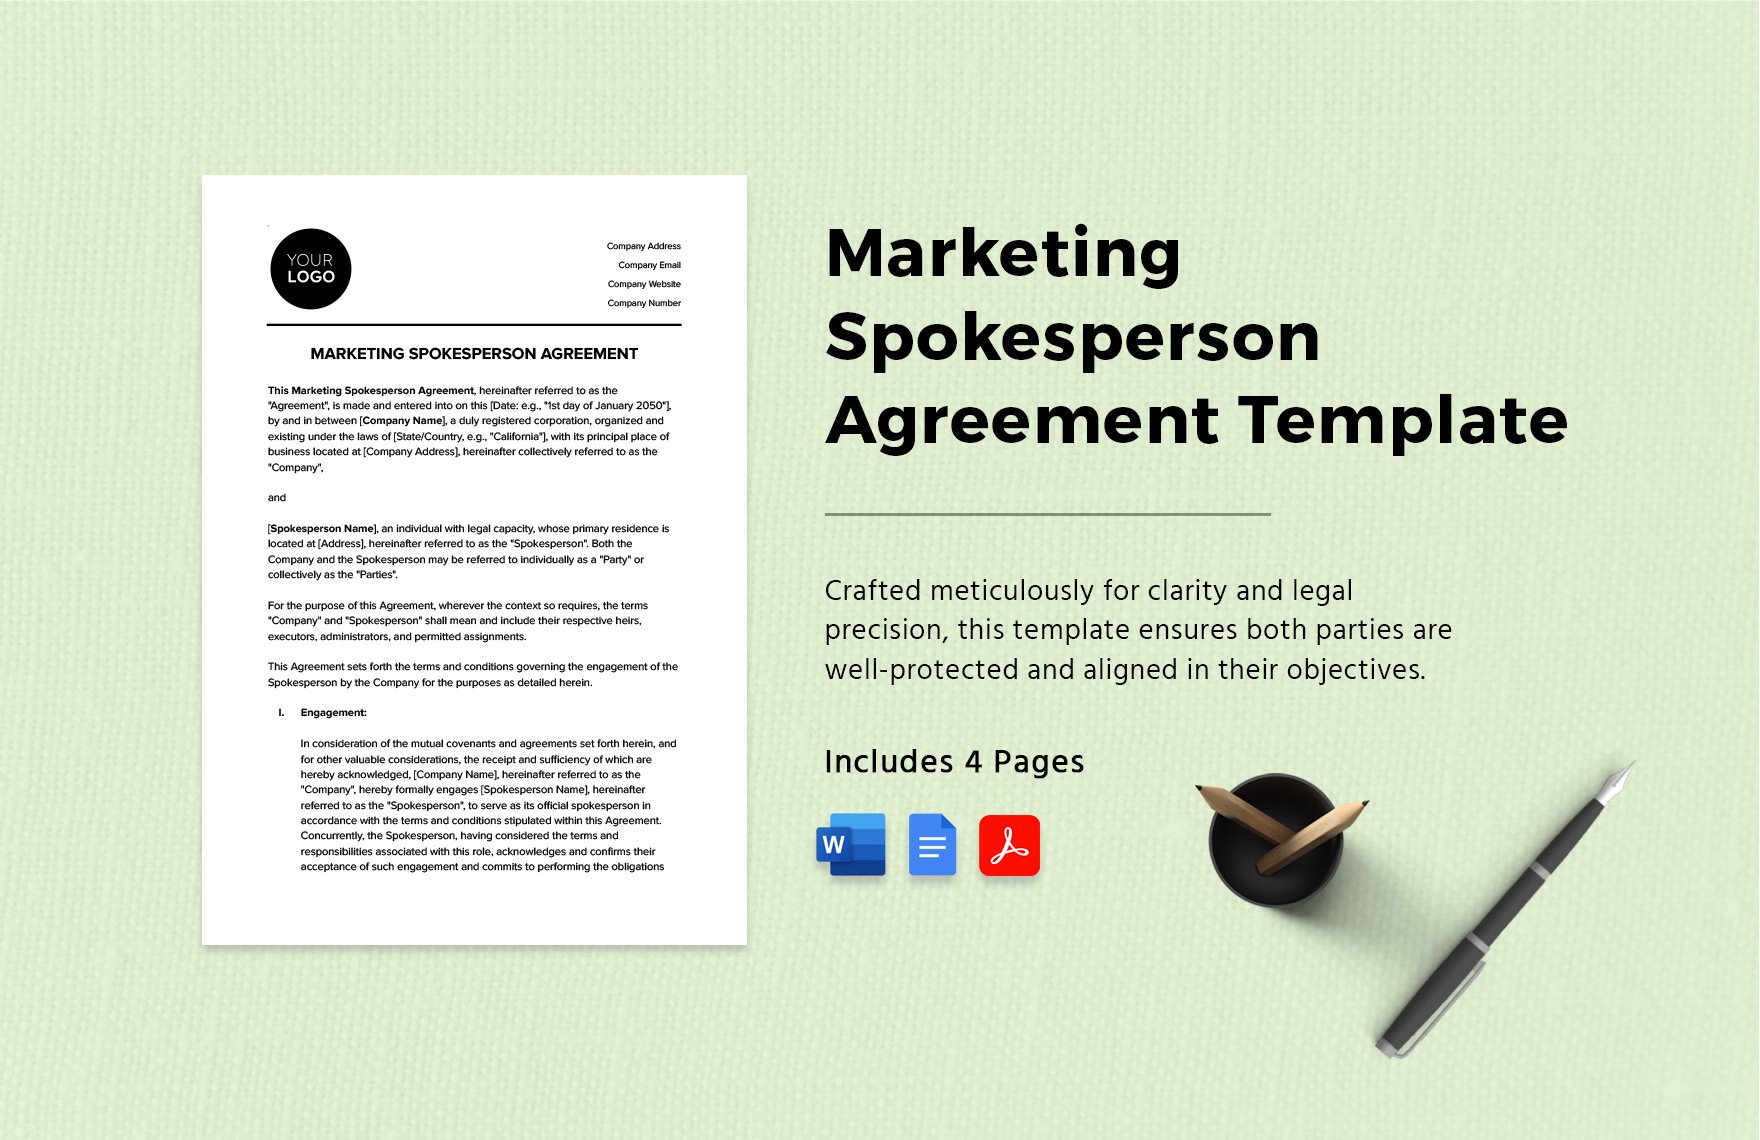 Marketing Spokesperson Agreement Template in Word, Google Docs, PDF